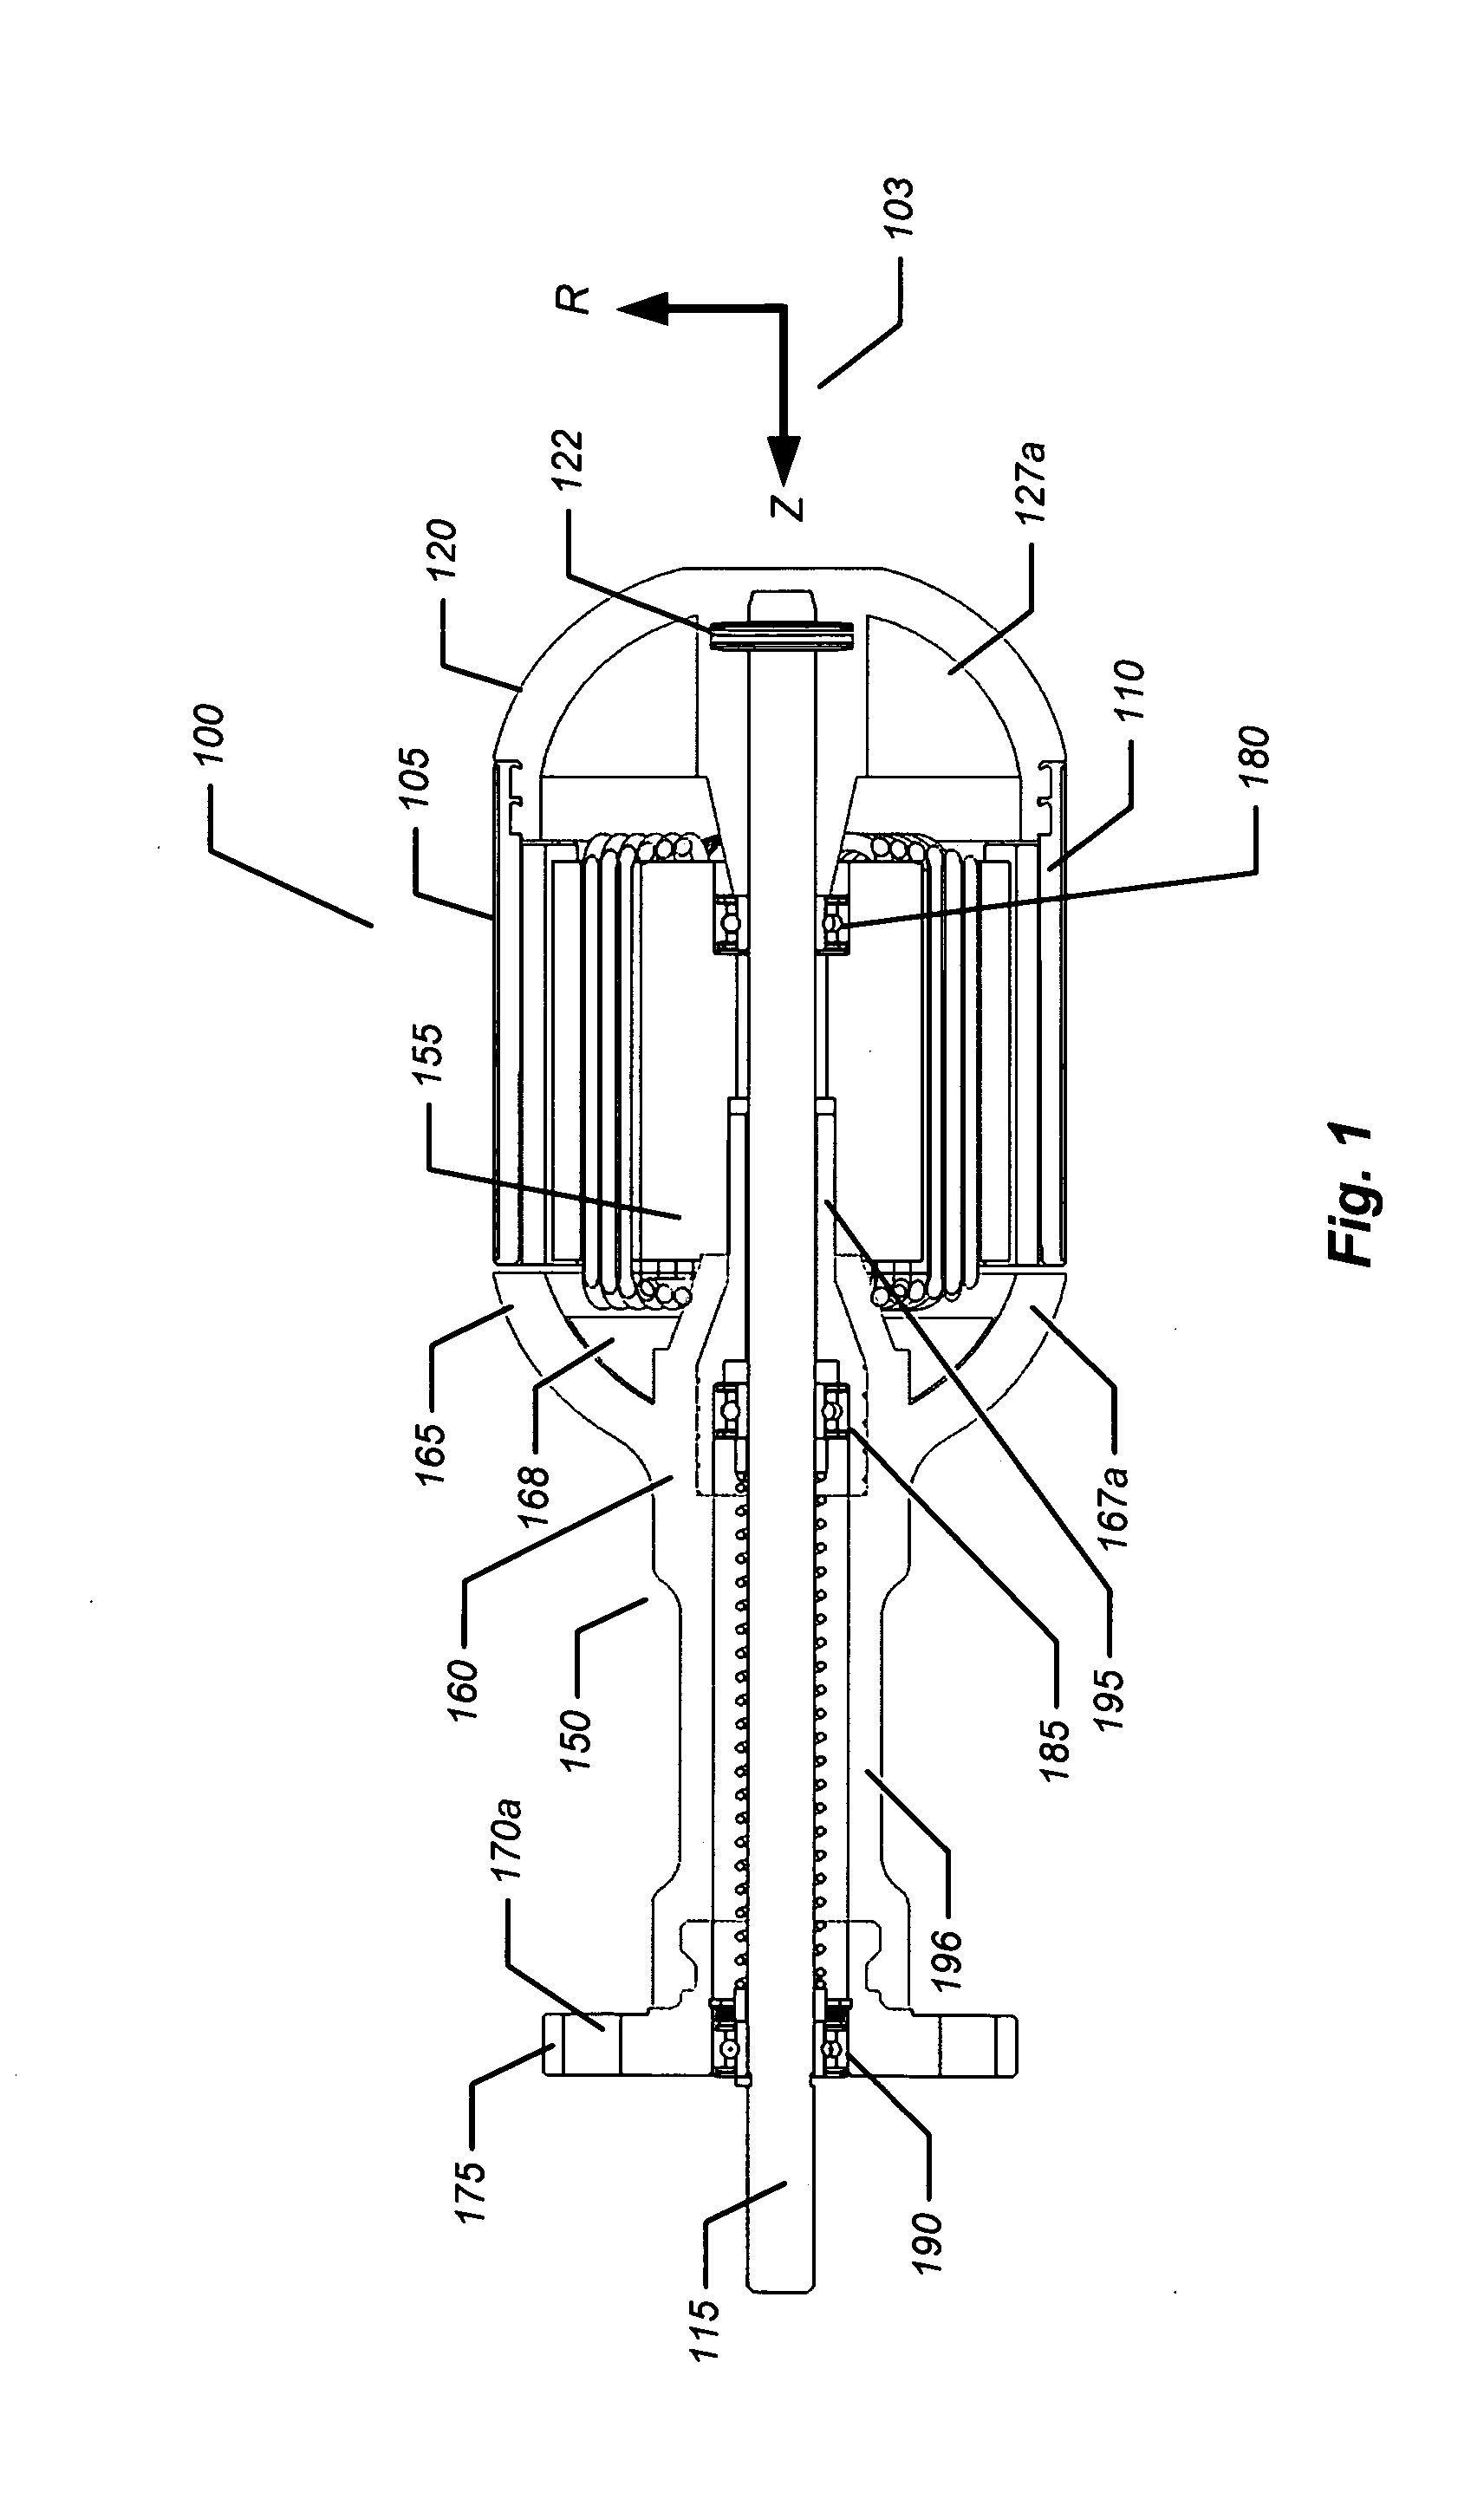 Brushless motor apparatus and method